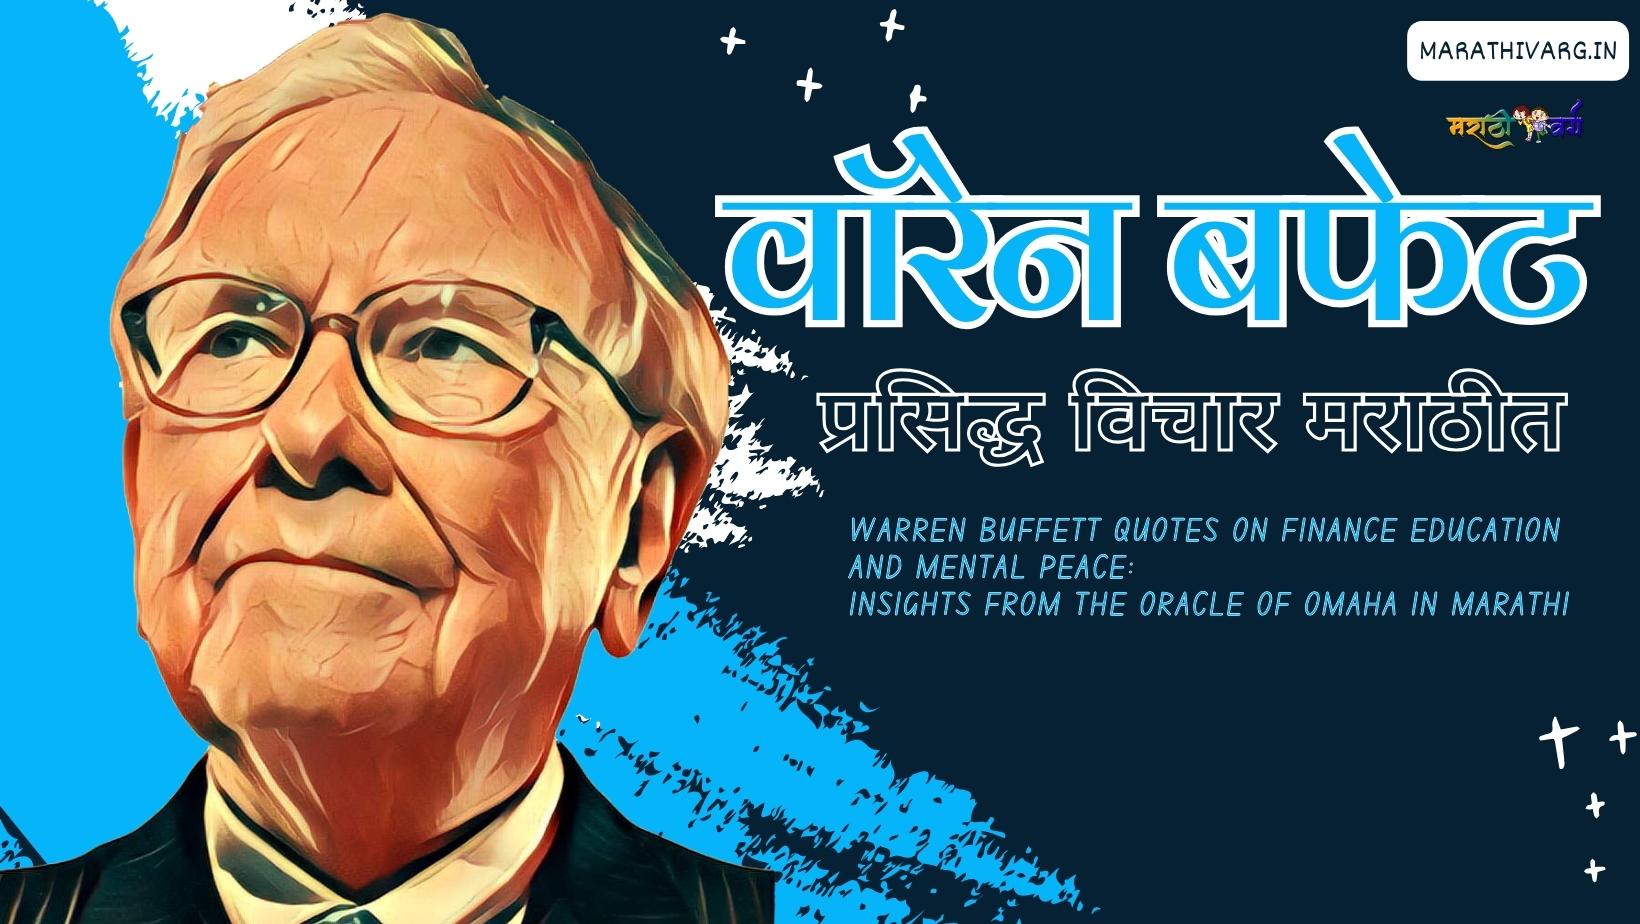 Warren Buffett's 75 Finance Education and Peace Quotes in marathi